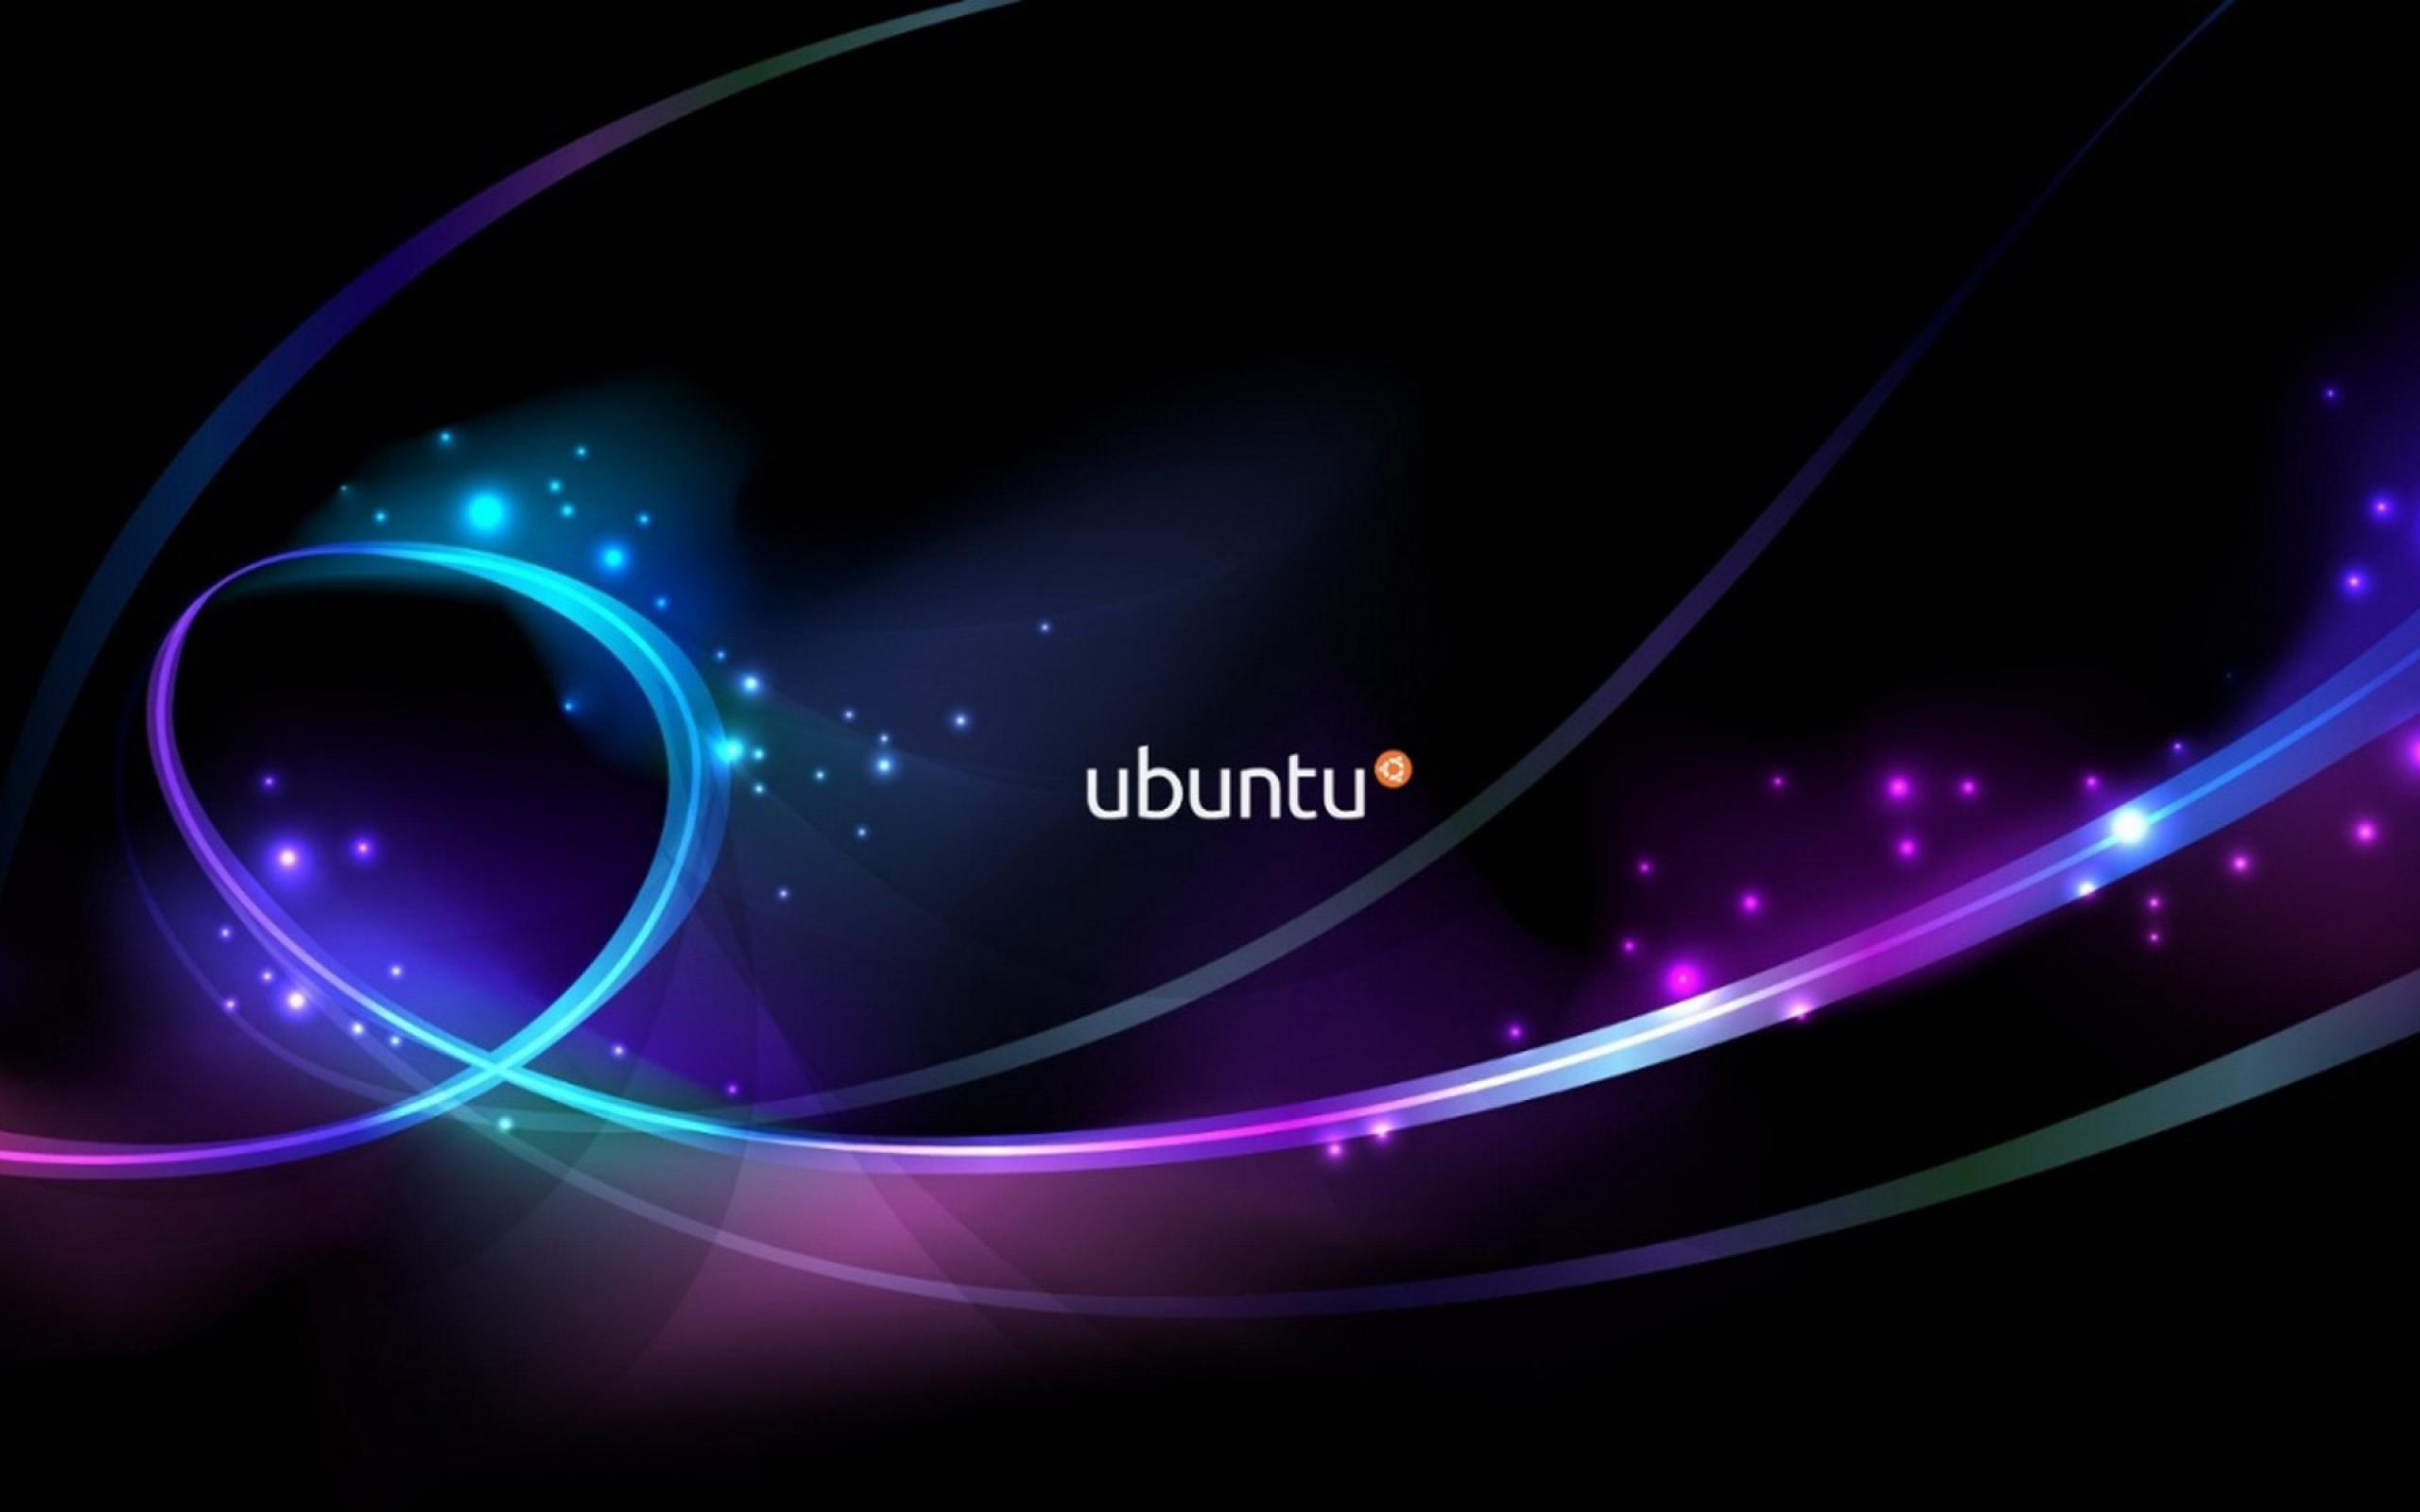 Ubuntu Wallpaper, Picture, Image